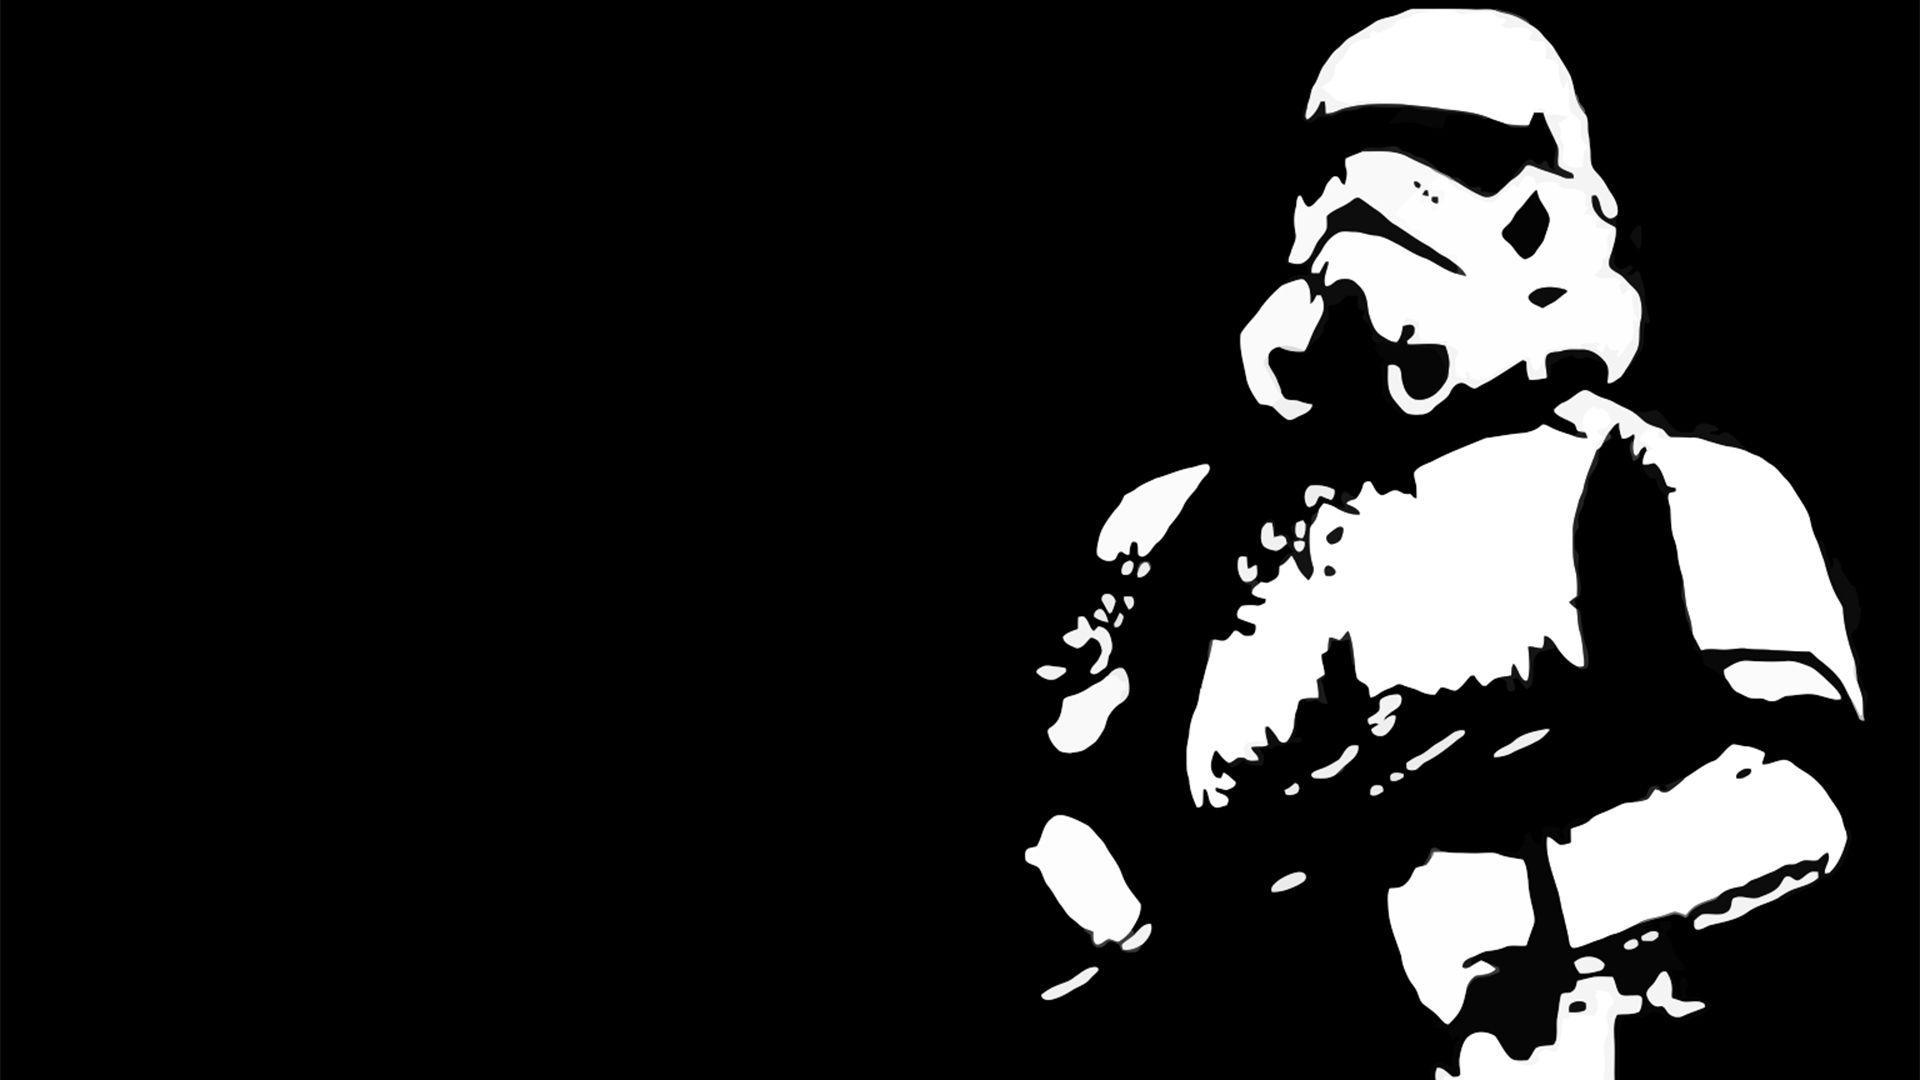 Star Wars Stormtrooper Wallpaper - Black And White Stormtrooper - HD Wallpaper 